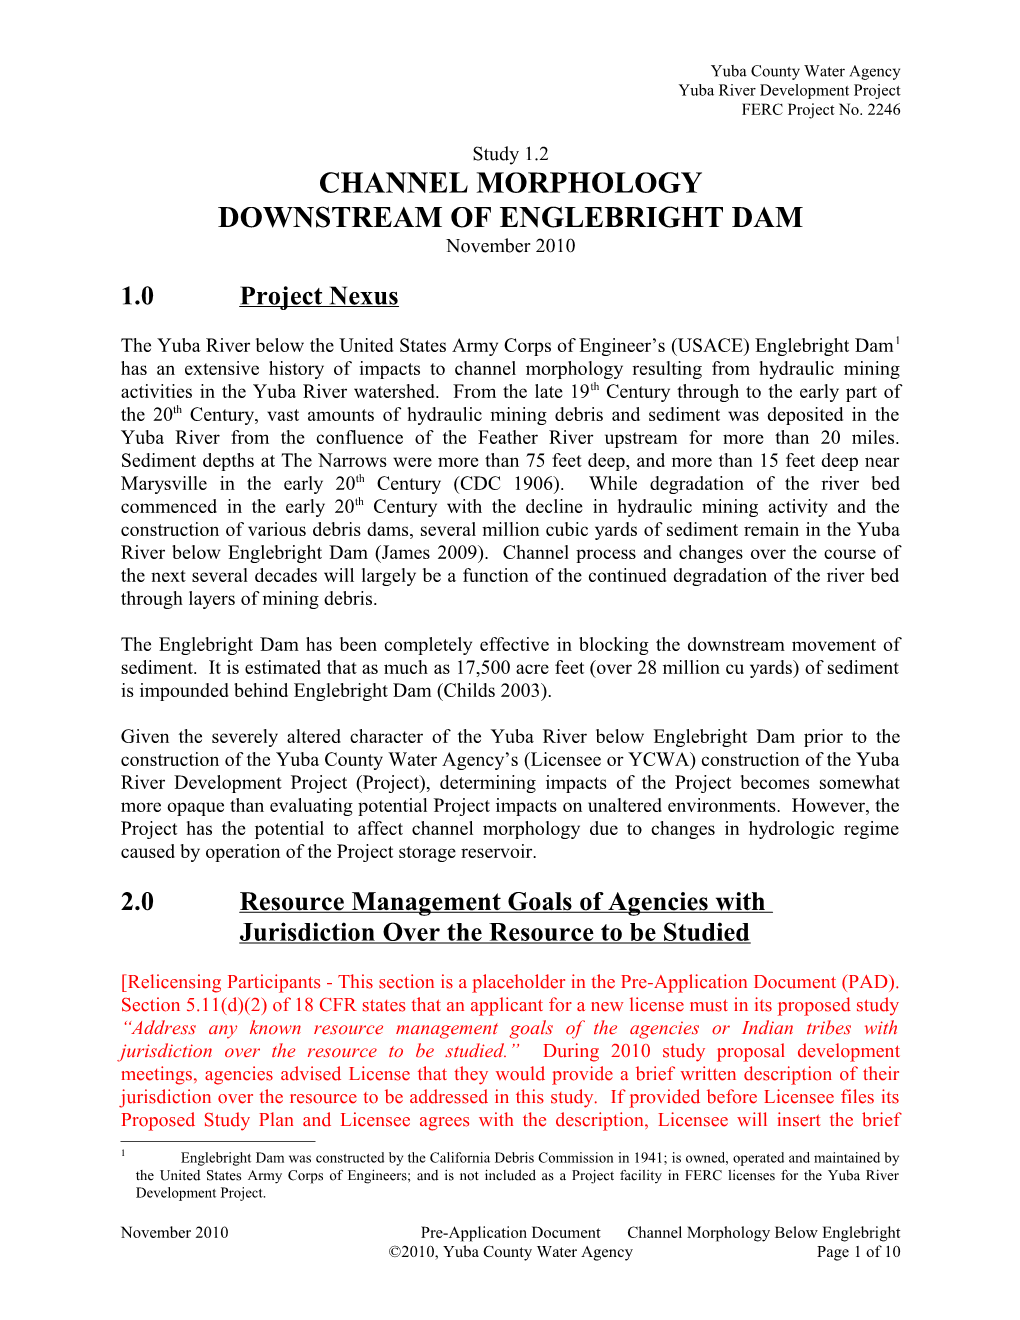 DRAFT Study Proposal 1.2 - Channel Morphology Downstream of Englebright